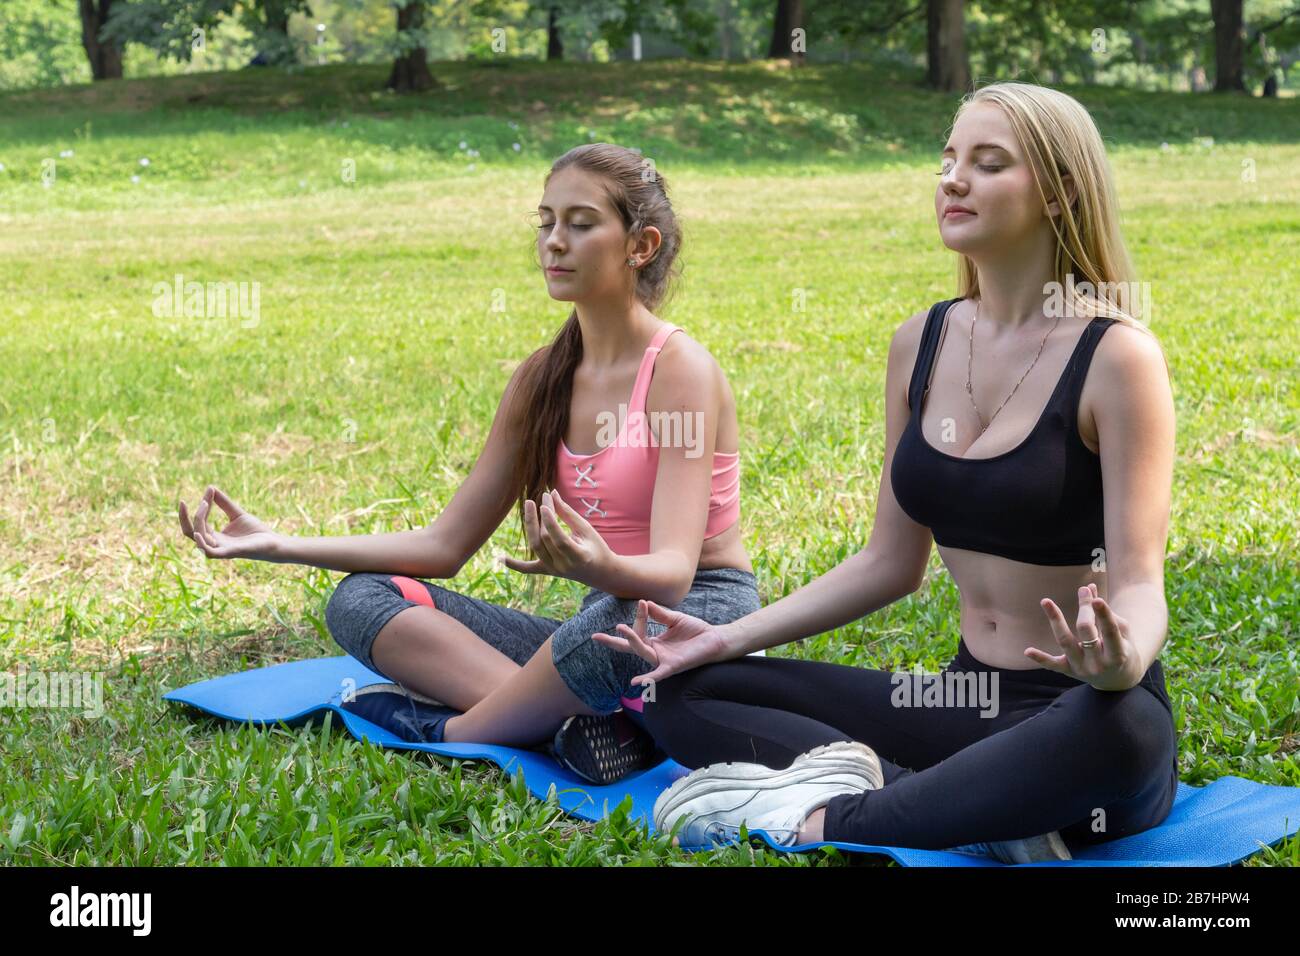 Two sports girls practice yoga Stock Photo - Alamy